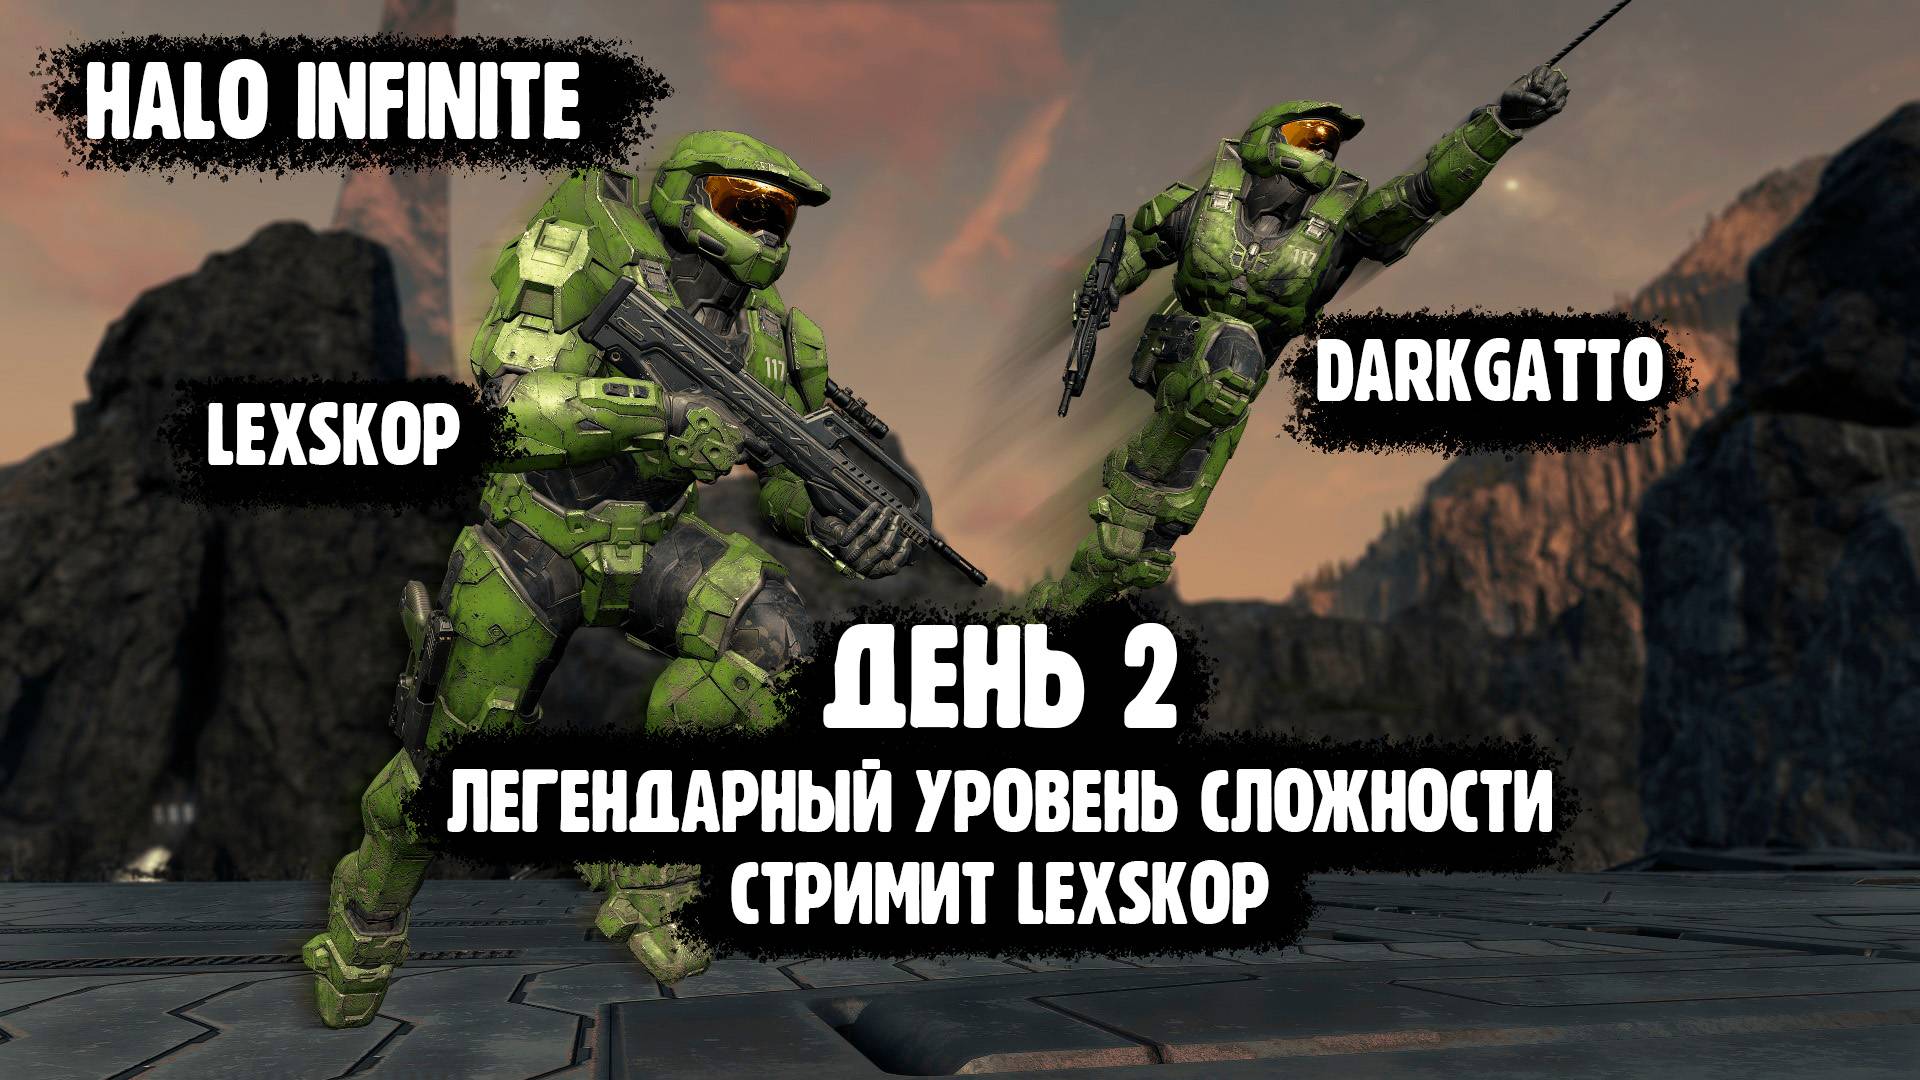 Halo Infinite | День 2 | Сносим ковенантов с DarkGatto на Легендарной сложности:)